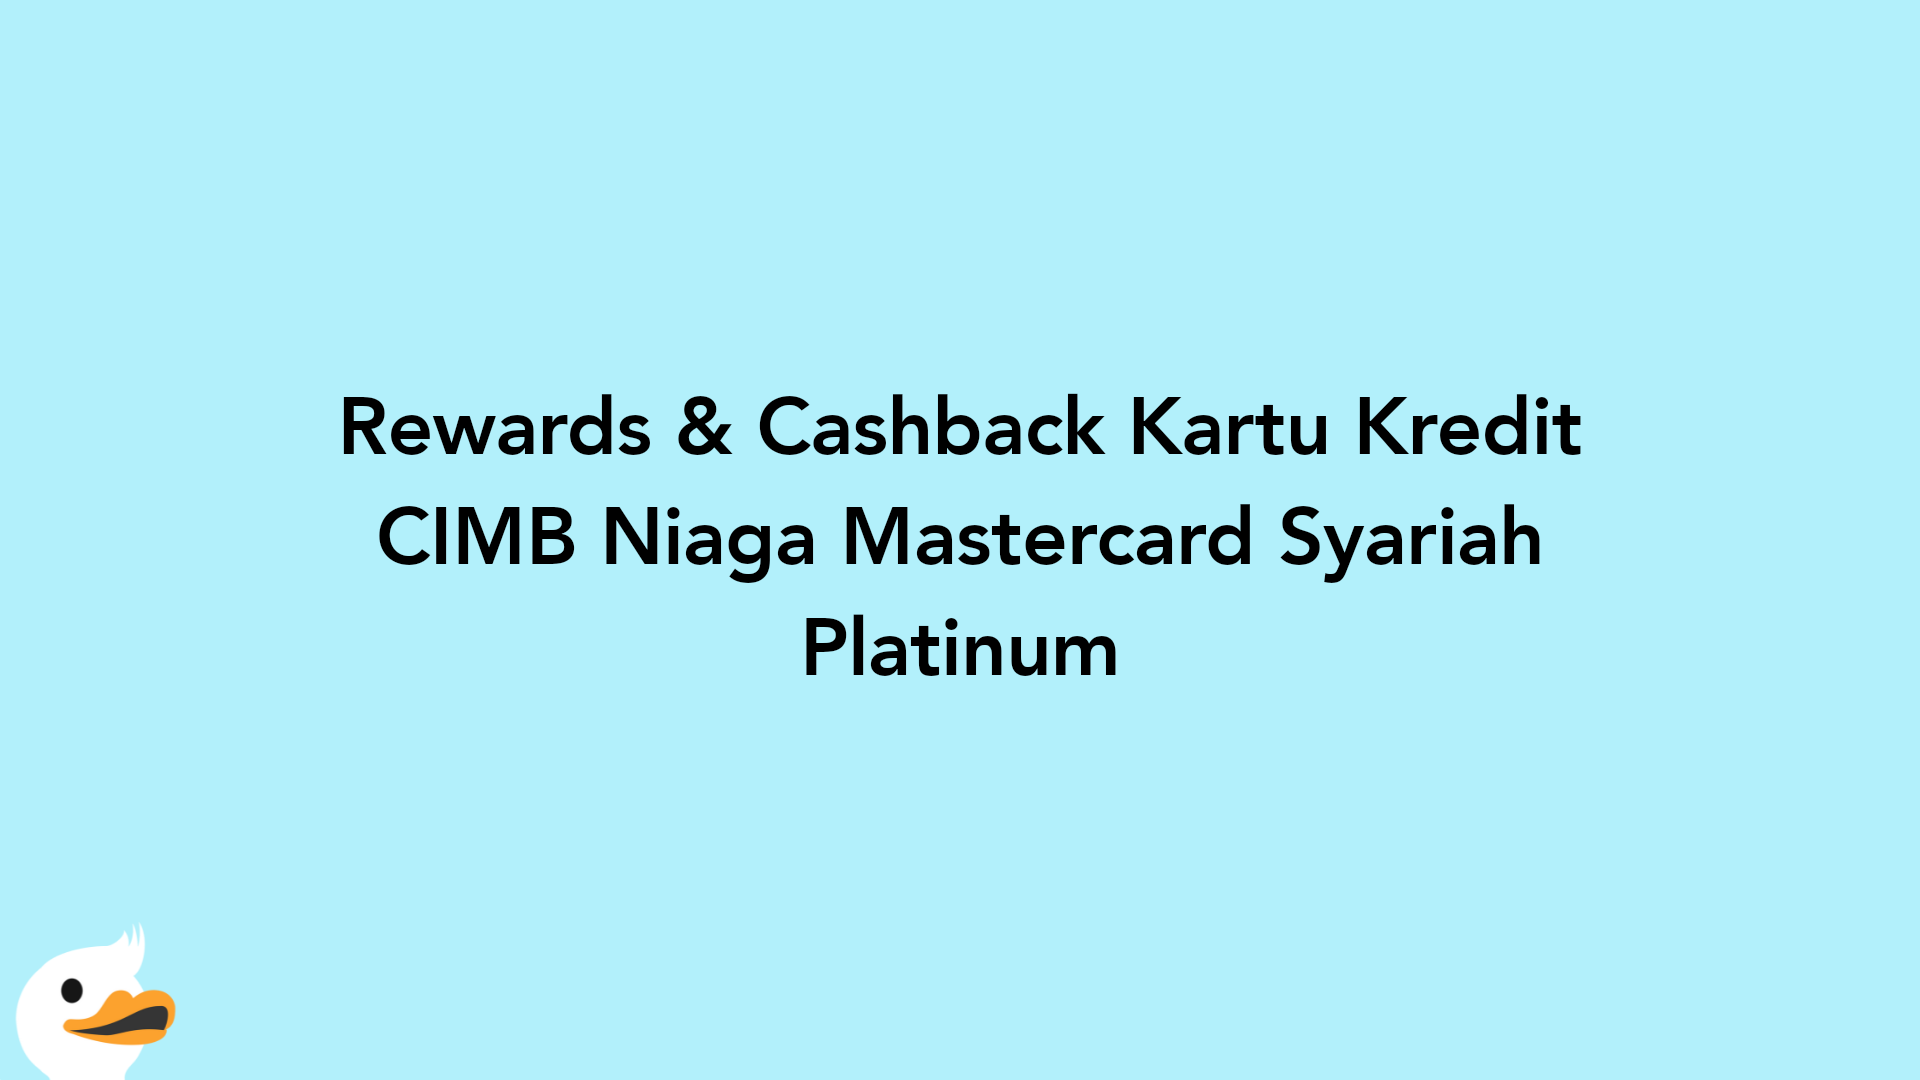 Rewards & Cashback Kartu Kredit CIMB Niaga Mastercard Syariah Platinum